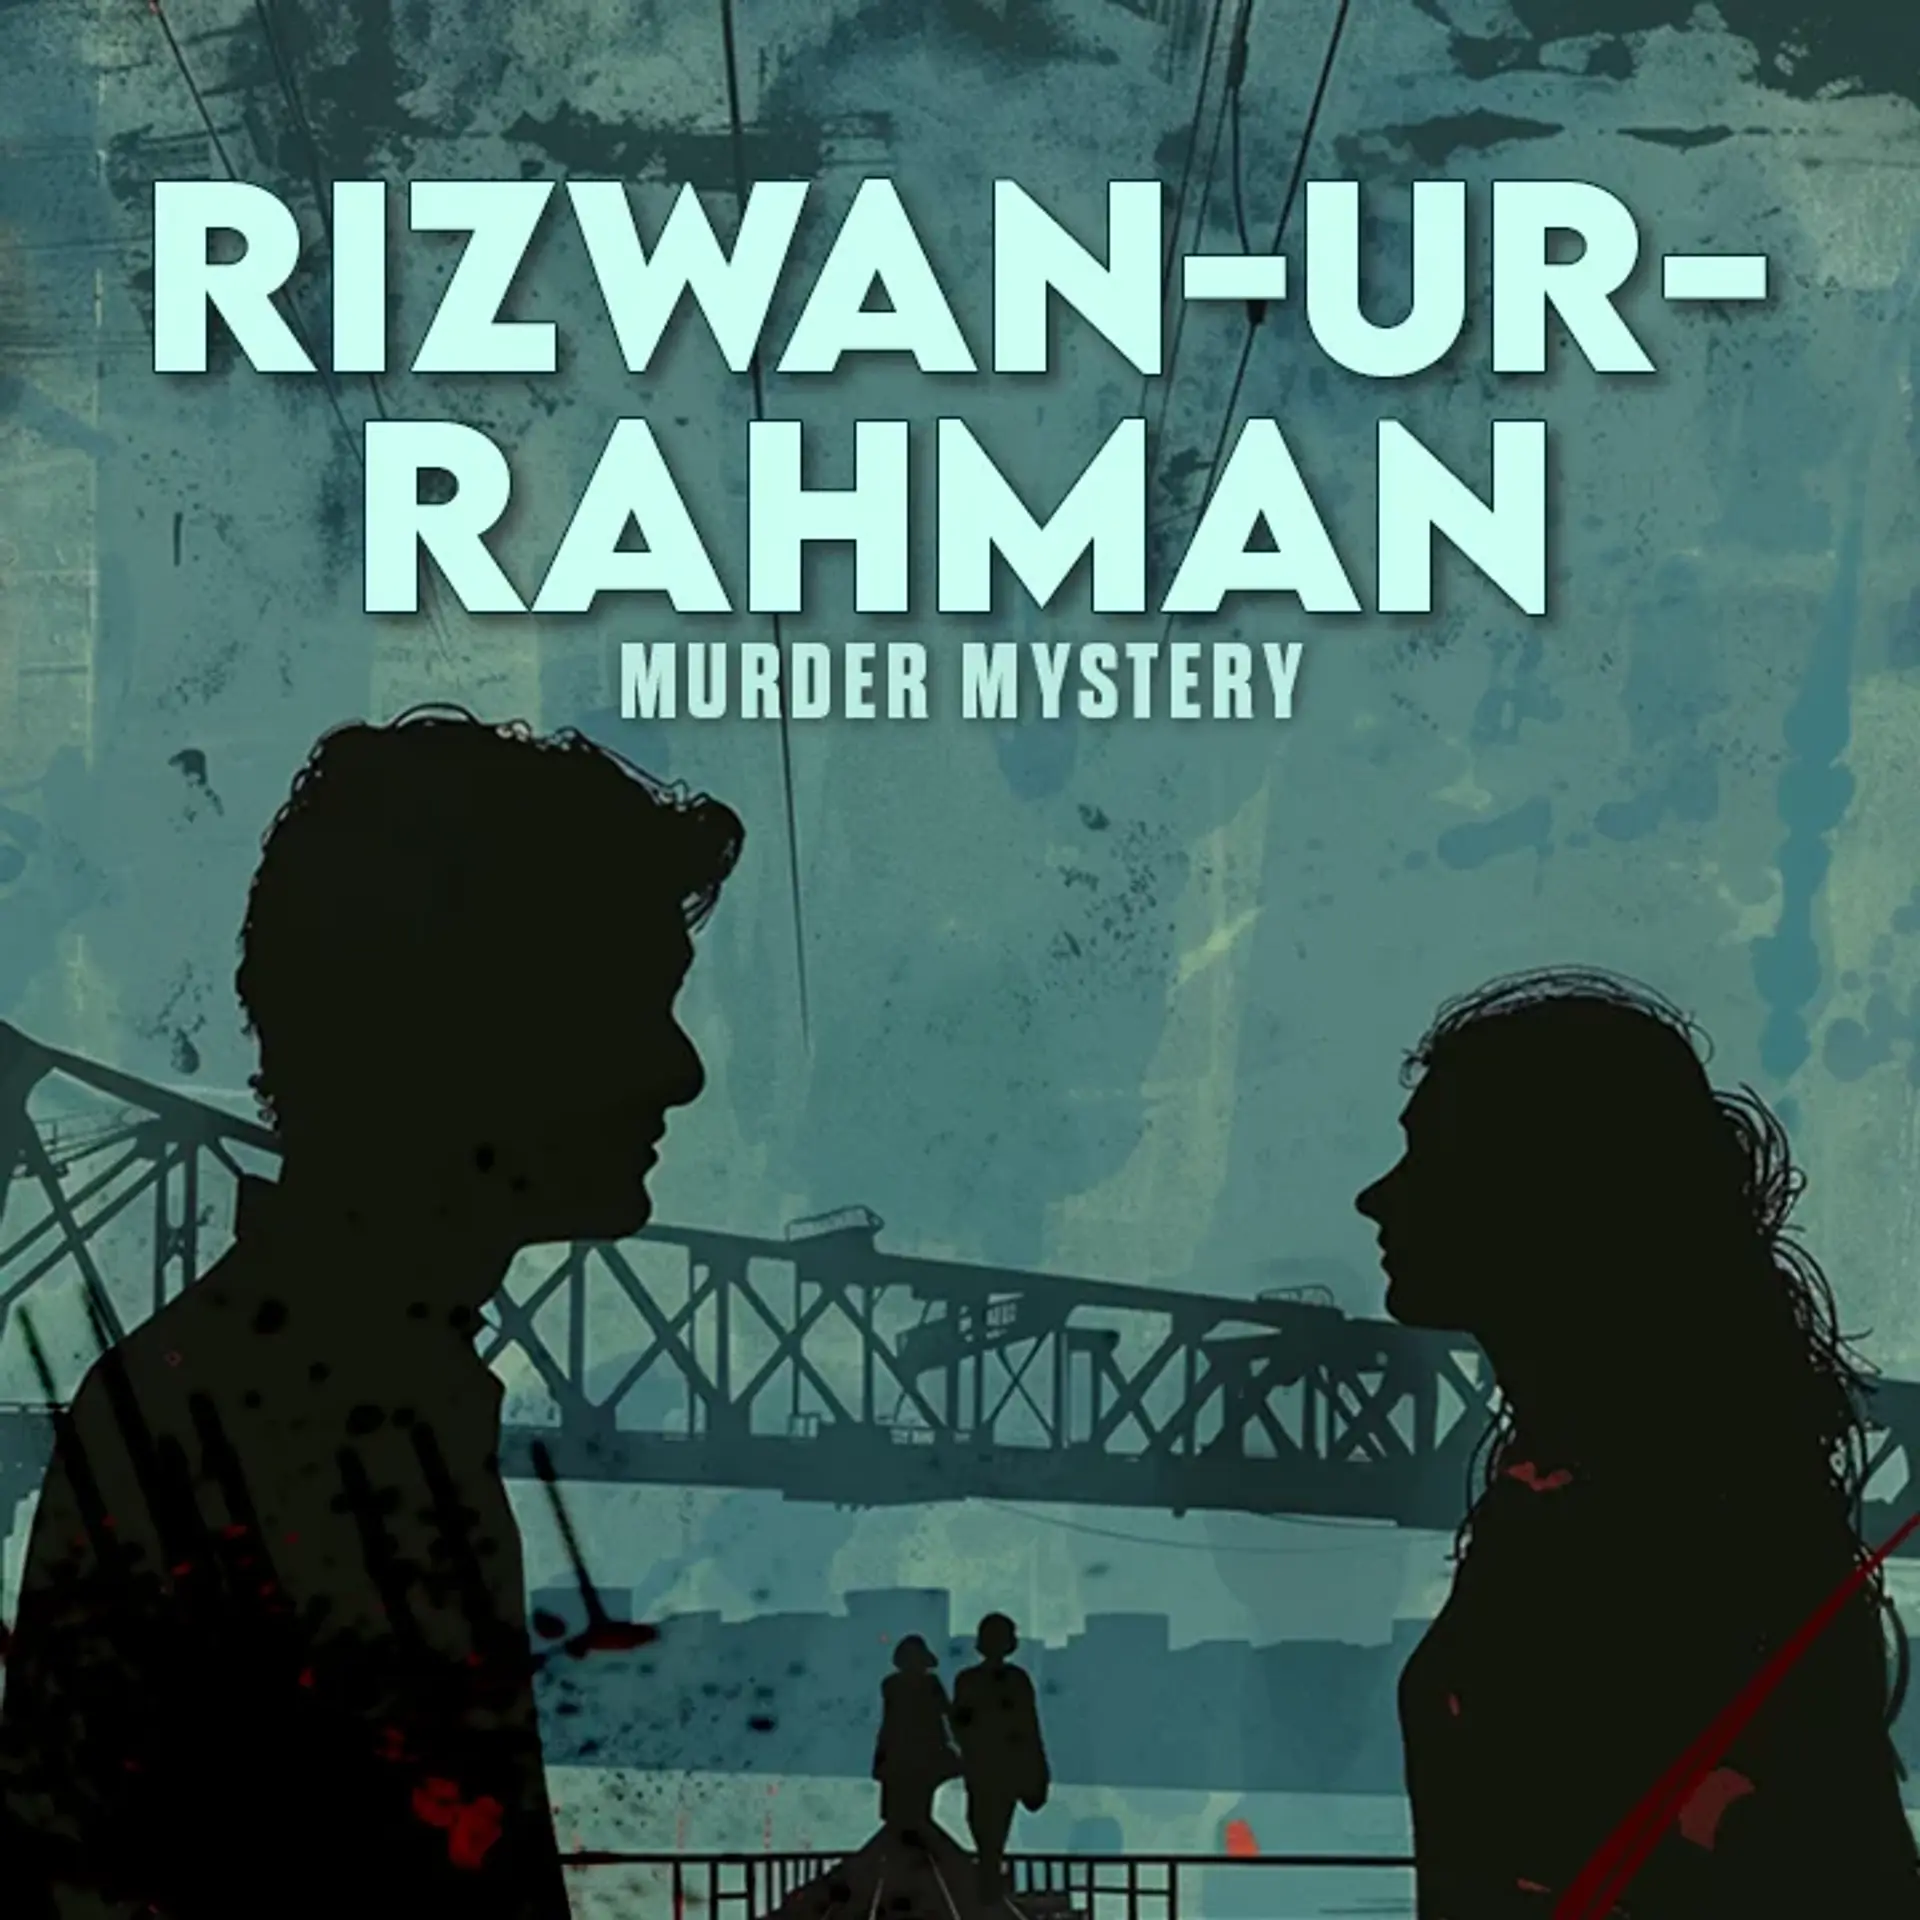 Rizwan-UR-Rahman Murder Mystery | 